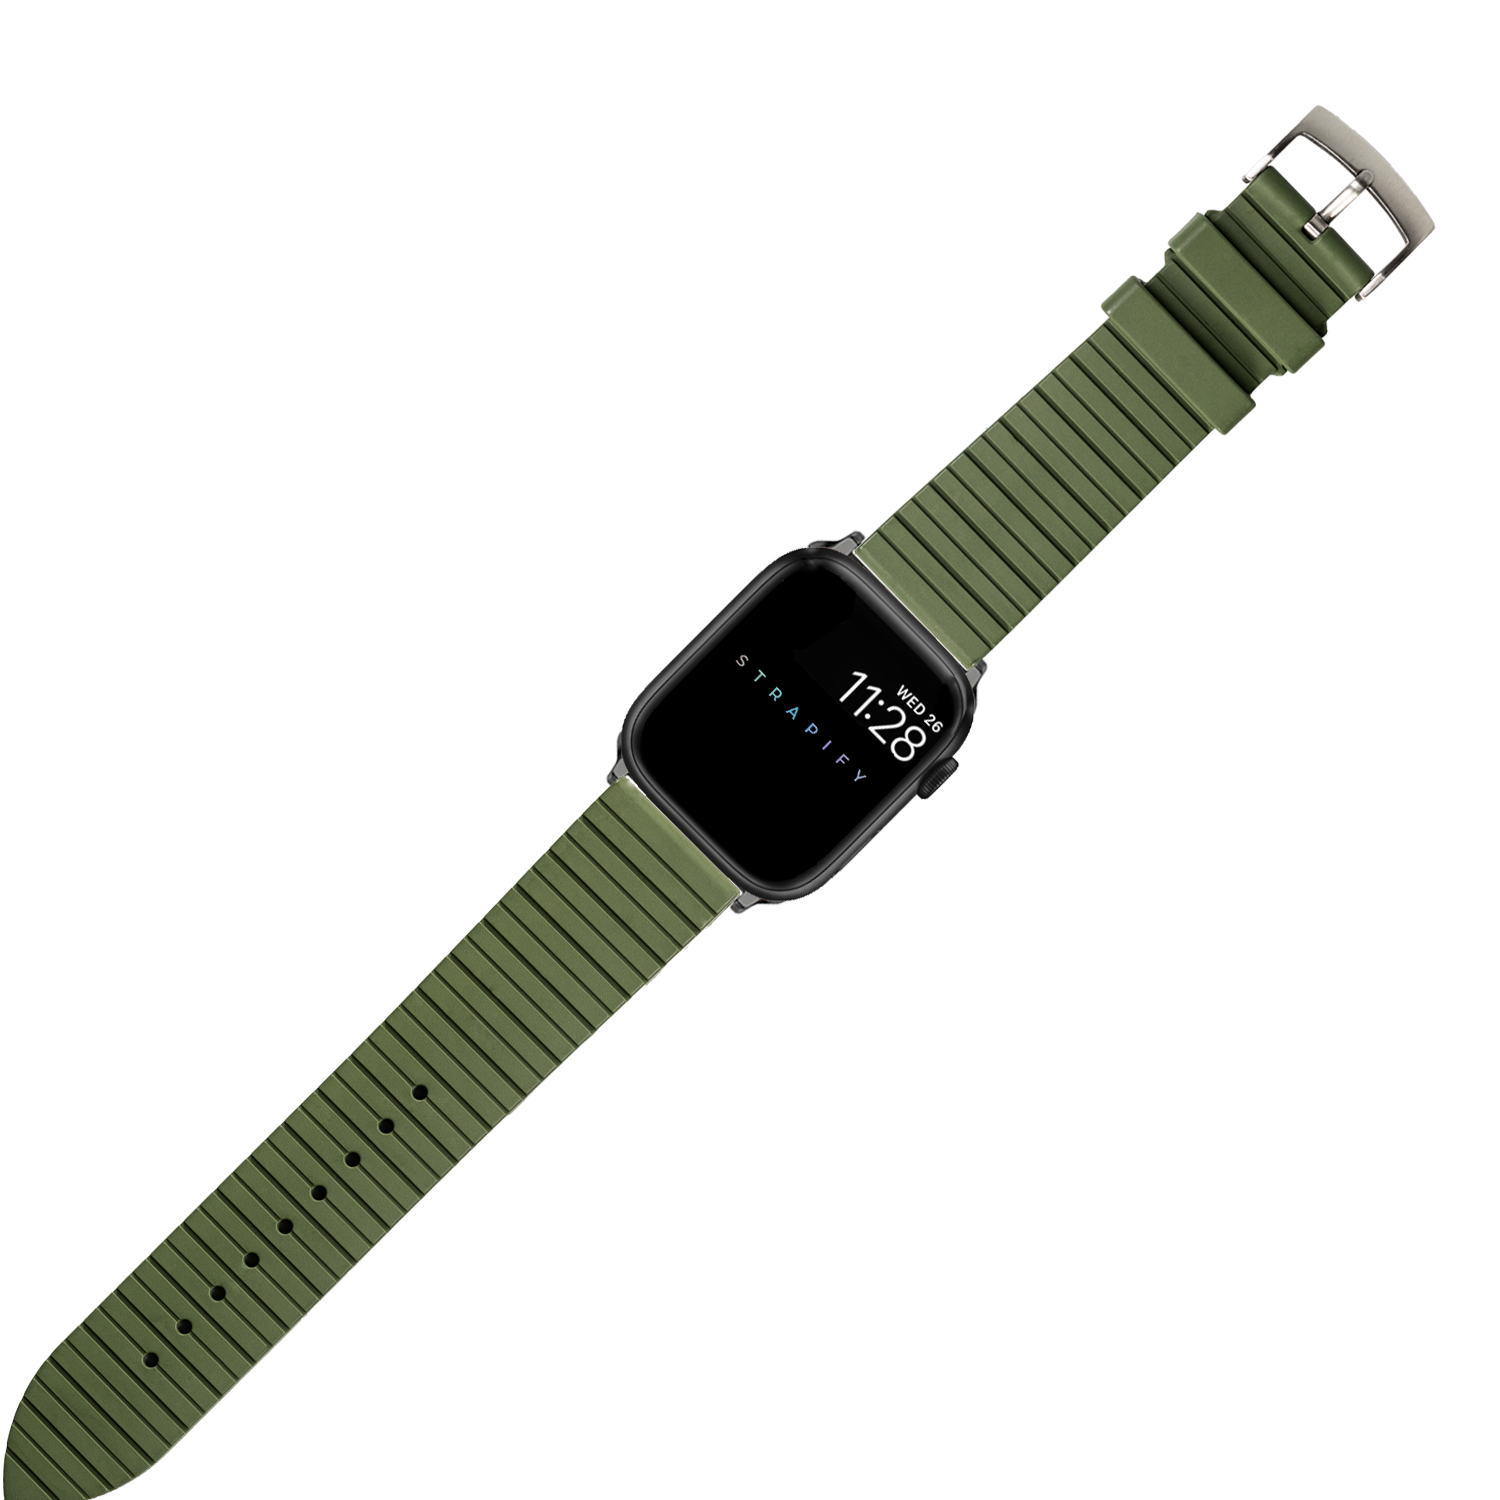 [Apple Watch] King Panelarc FKM Rubber - Army Green